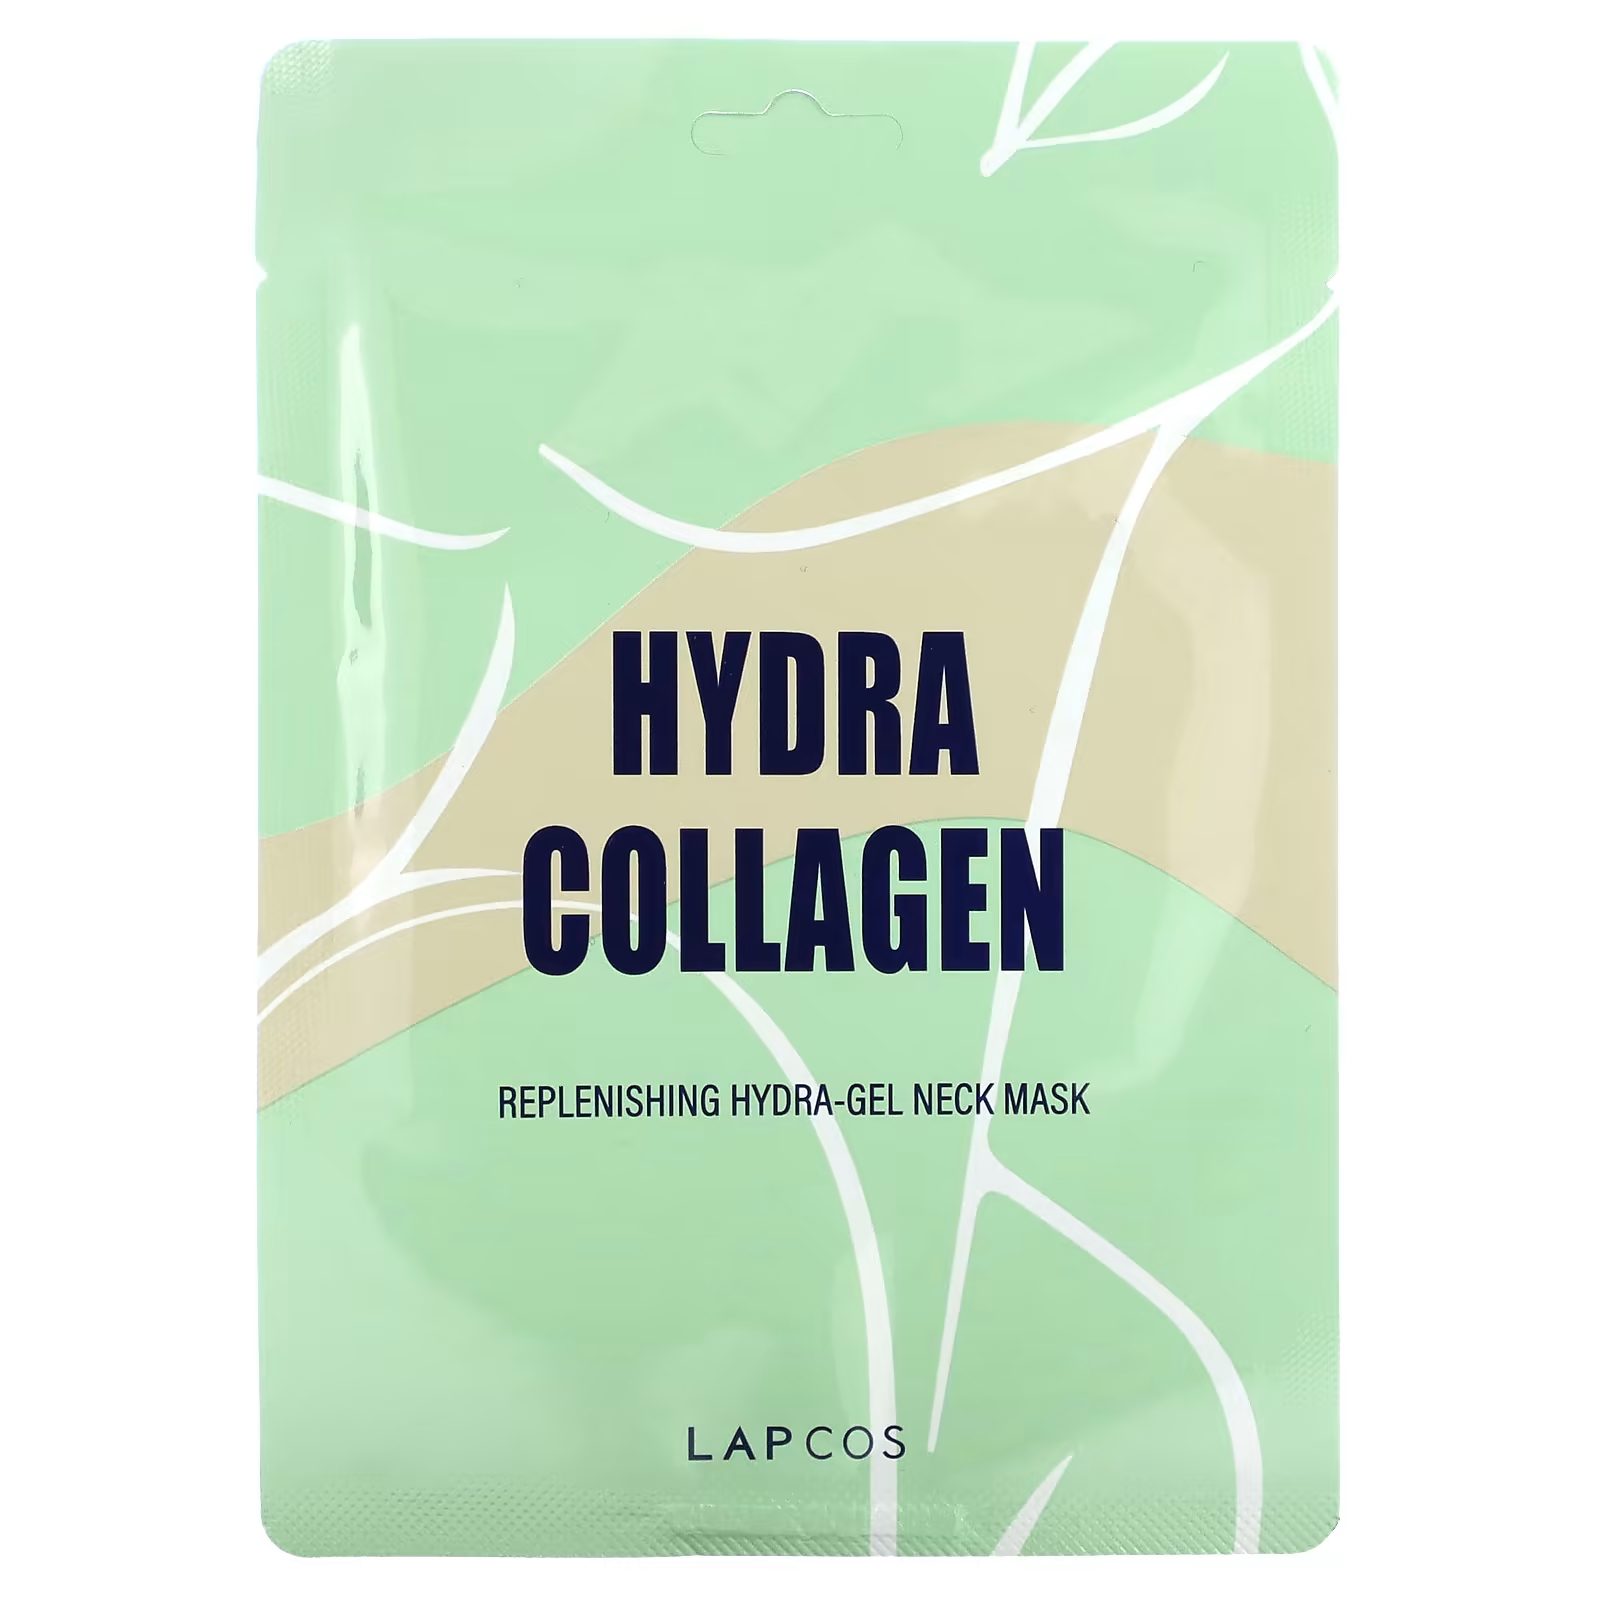 Косметическая маска для шеи Lapcos Hydra Collagen Hydra-Gel восстанавливающая, 15 гр. lapcos hydra collagen renewing hydra gel chest beauty mask 1 sheet 1 14 oz 40 g